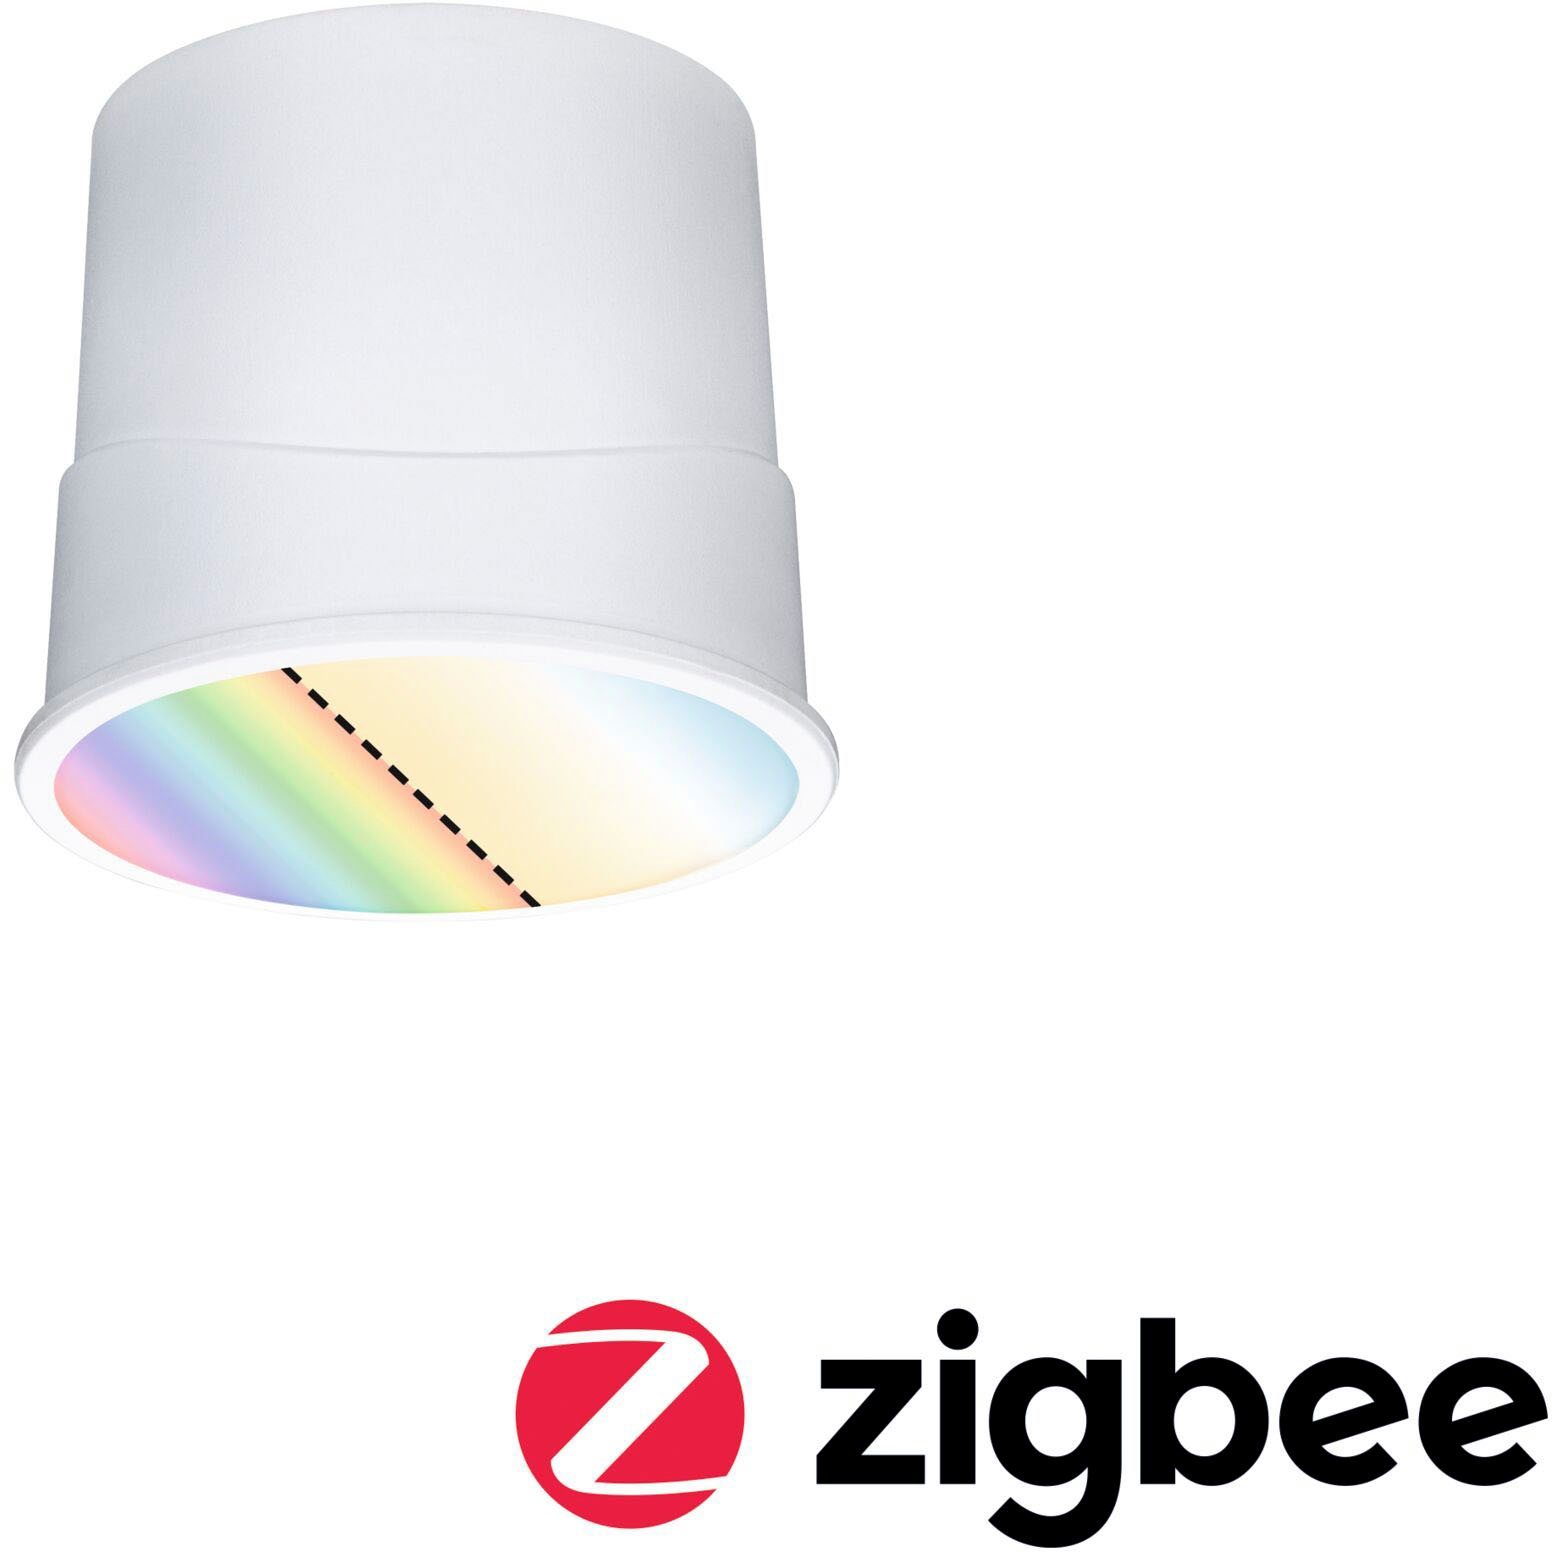 Zigbee 420lm, Paulmann Tageslichtweiß, RGBW Einbauleuchte 230V LED Base